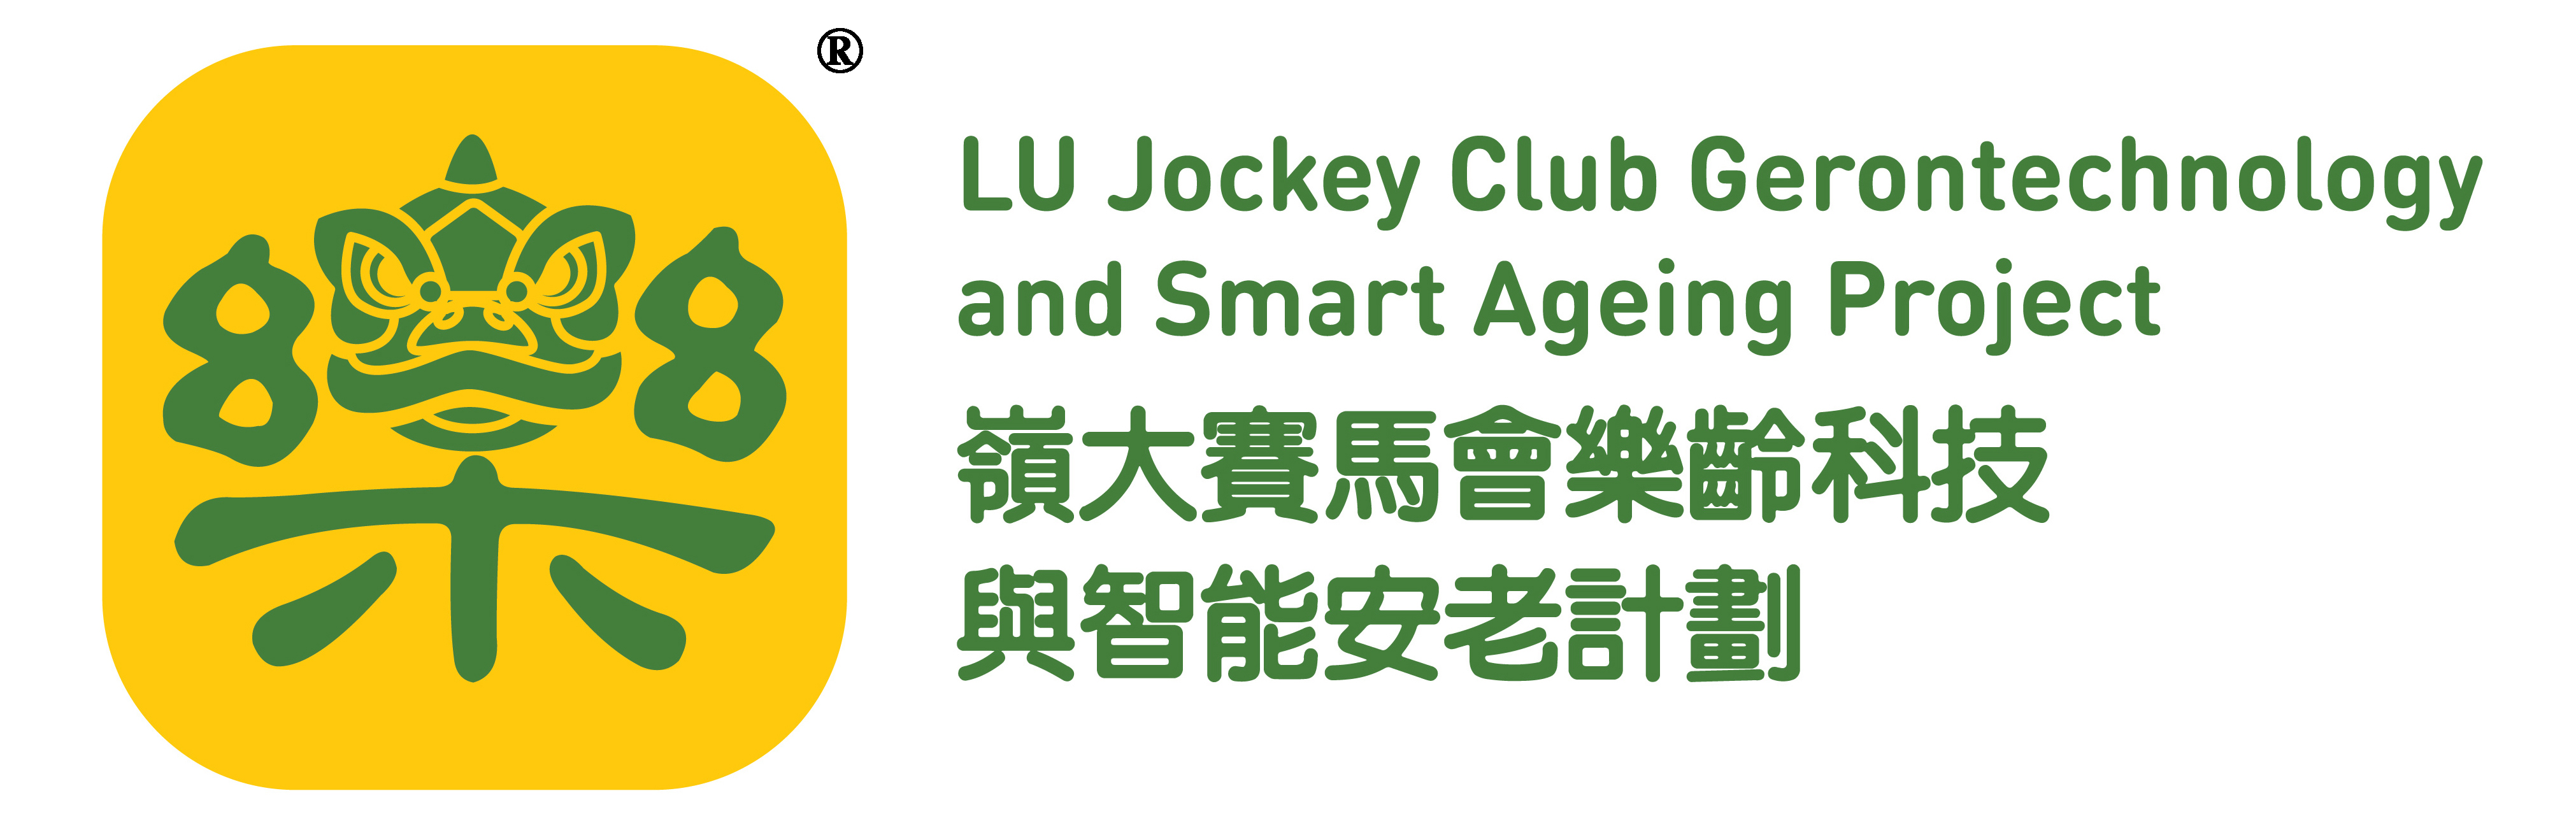 JCSAH - Jockey Club Smart Ageing Hub Day Experience Centre